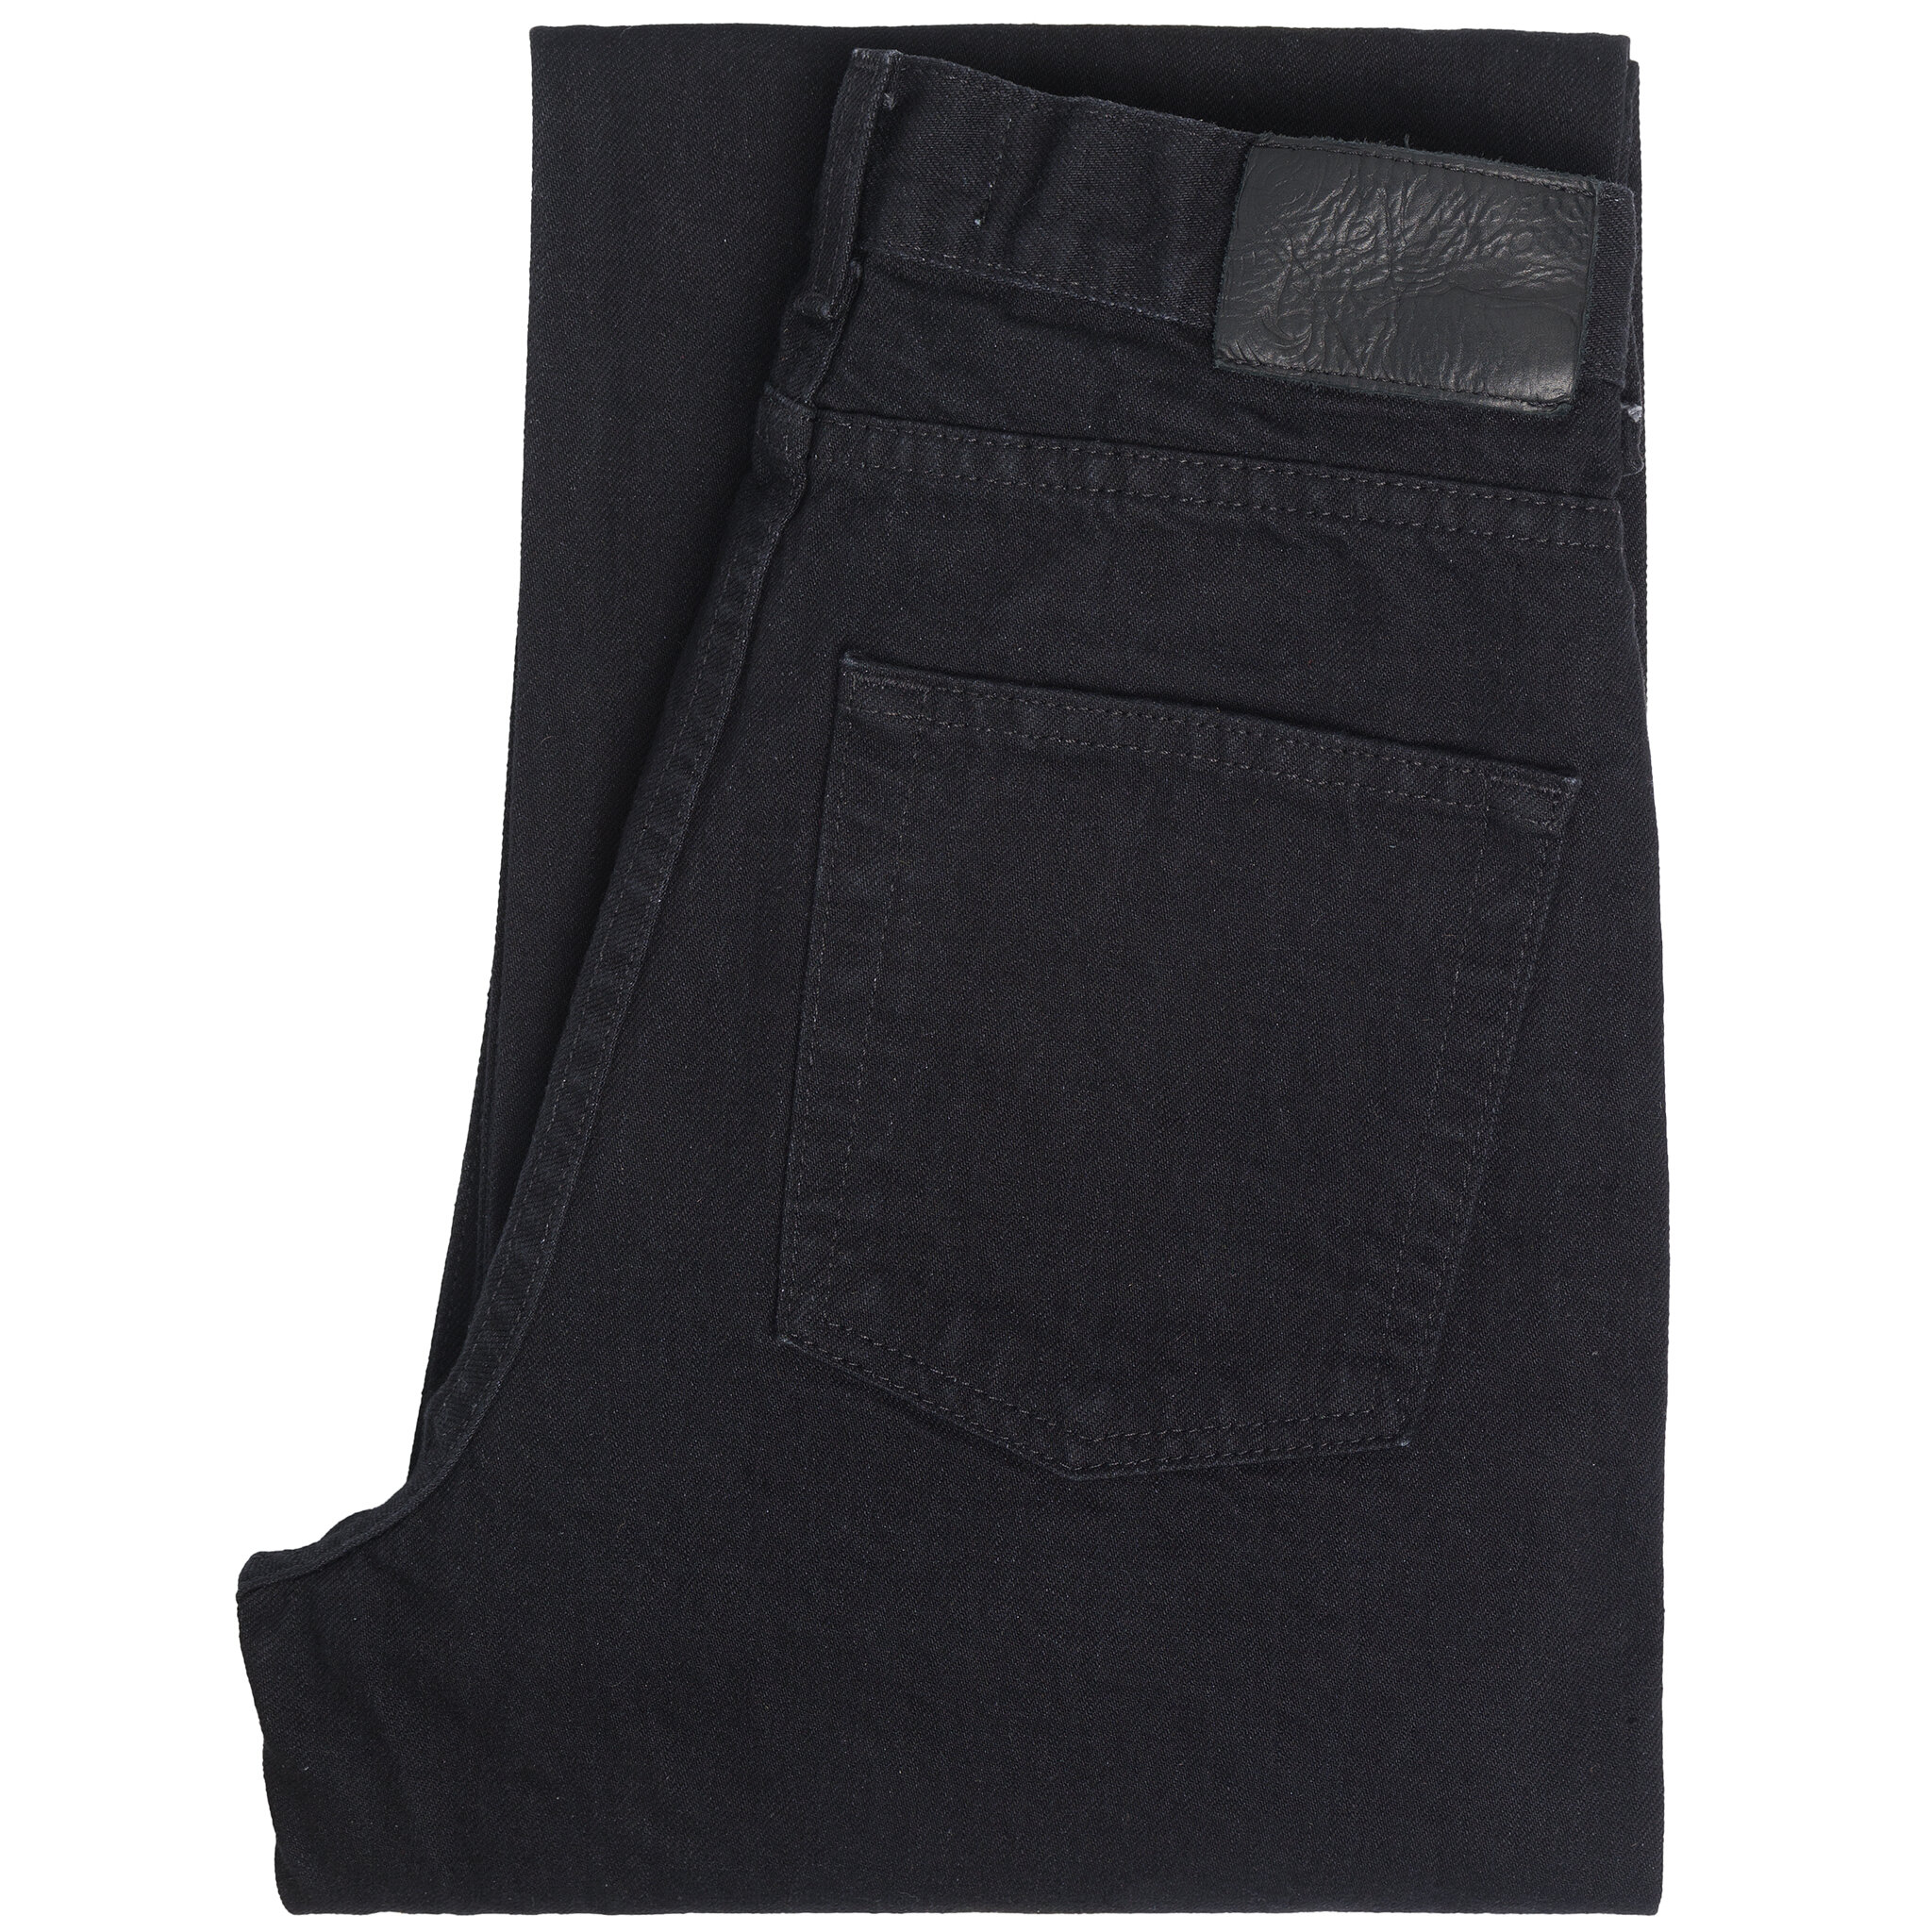  Women’s Solid Black Selvedge jeans - folded 